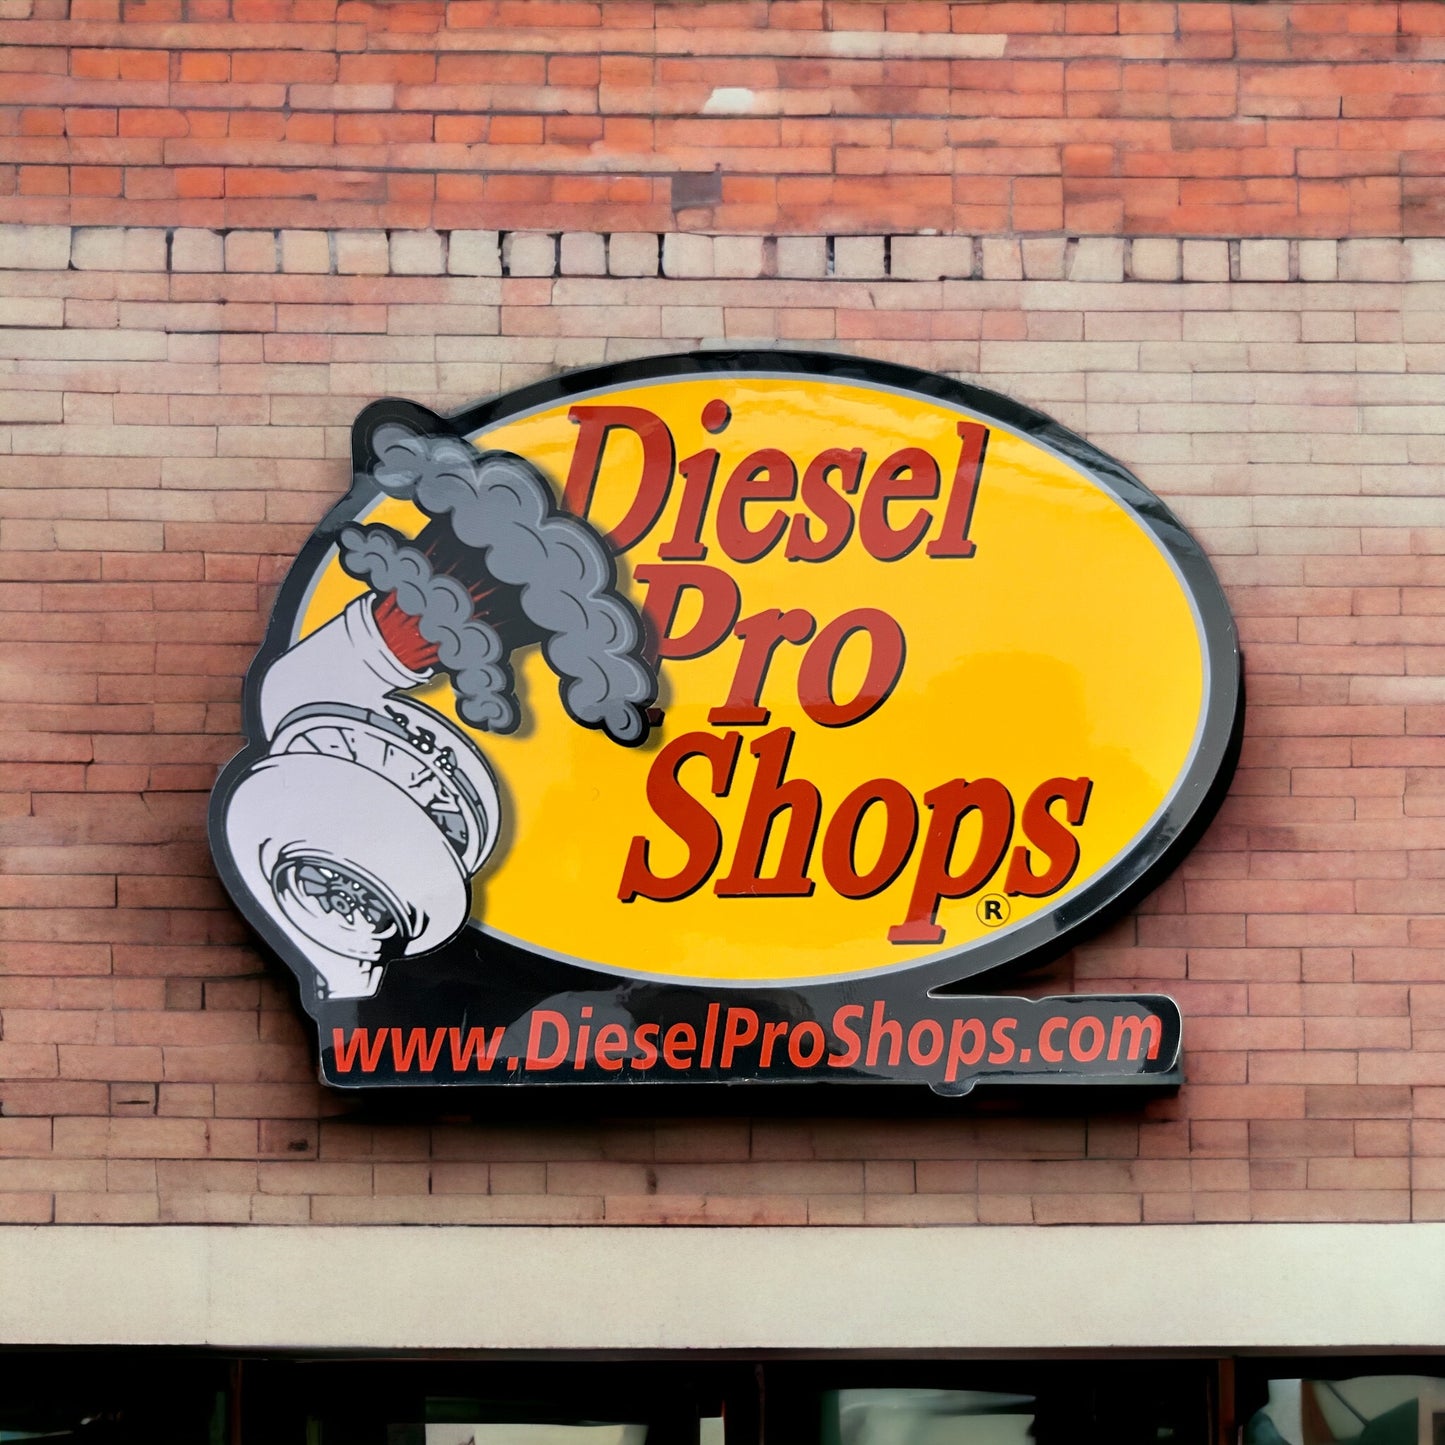 Diesel Pro Shops - Decal